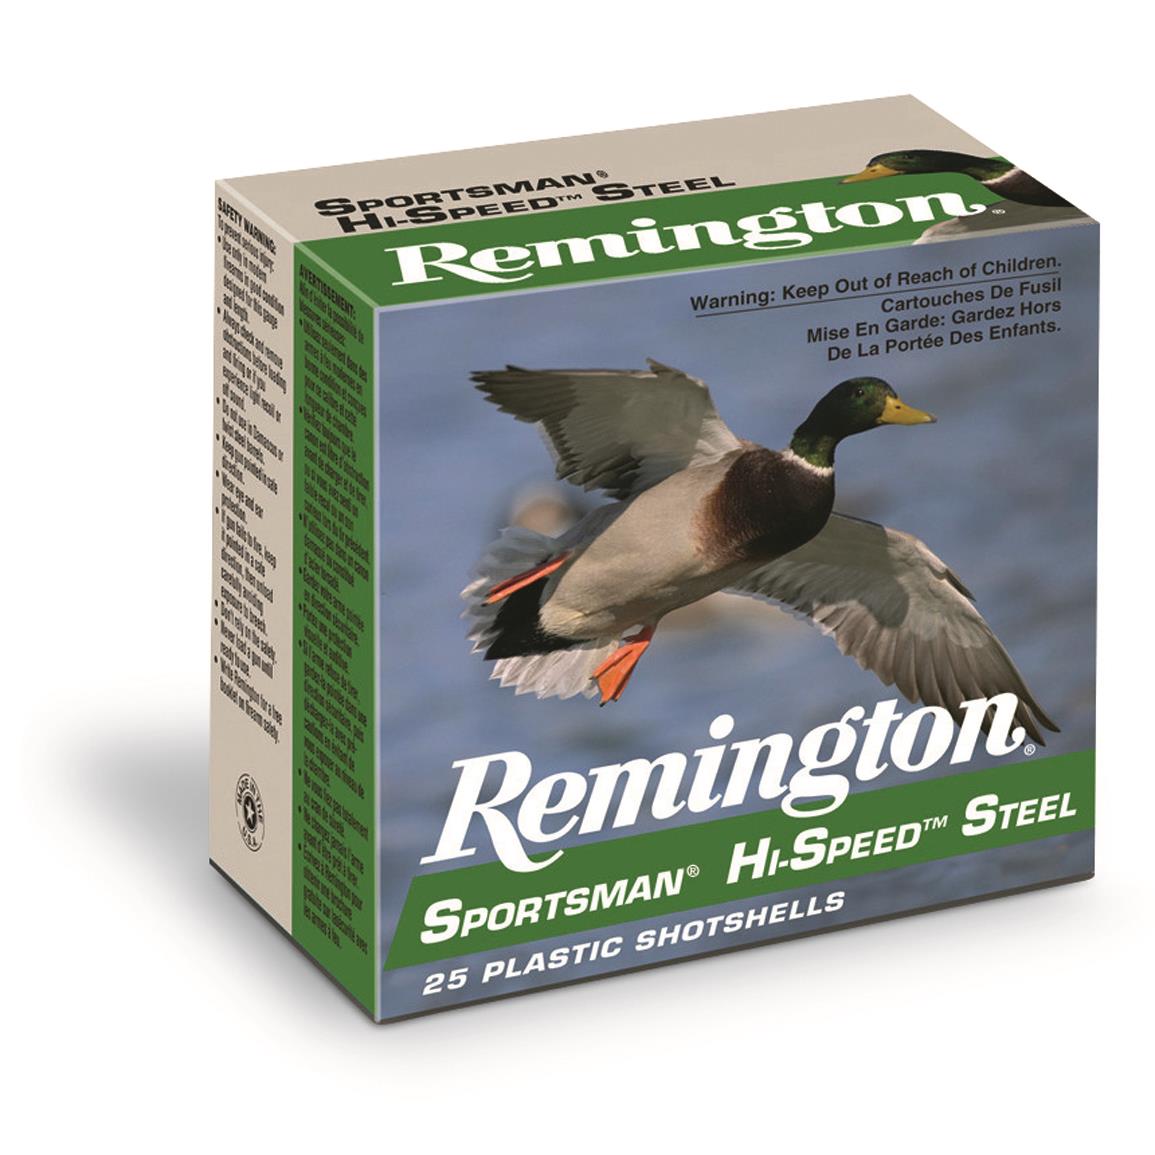 Remington Sportsman Hi-Speed Steel, 12 Gauge, 3" Shot Shells, 1 3/8 oz., 250 rounds